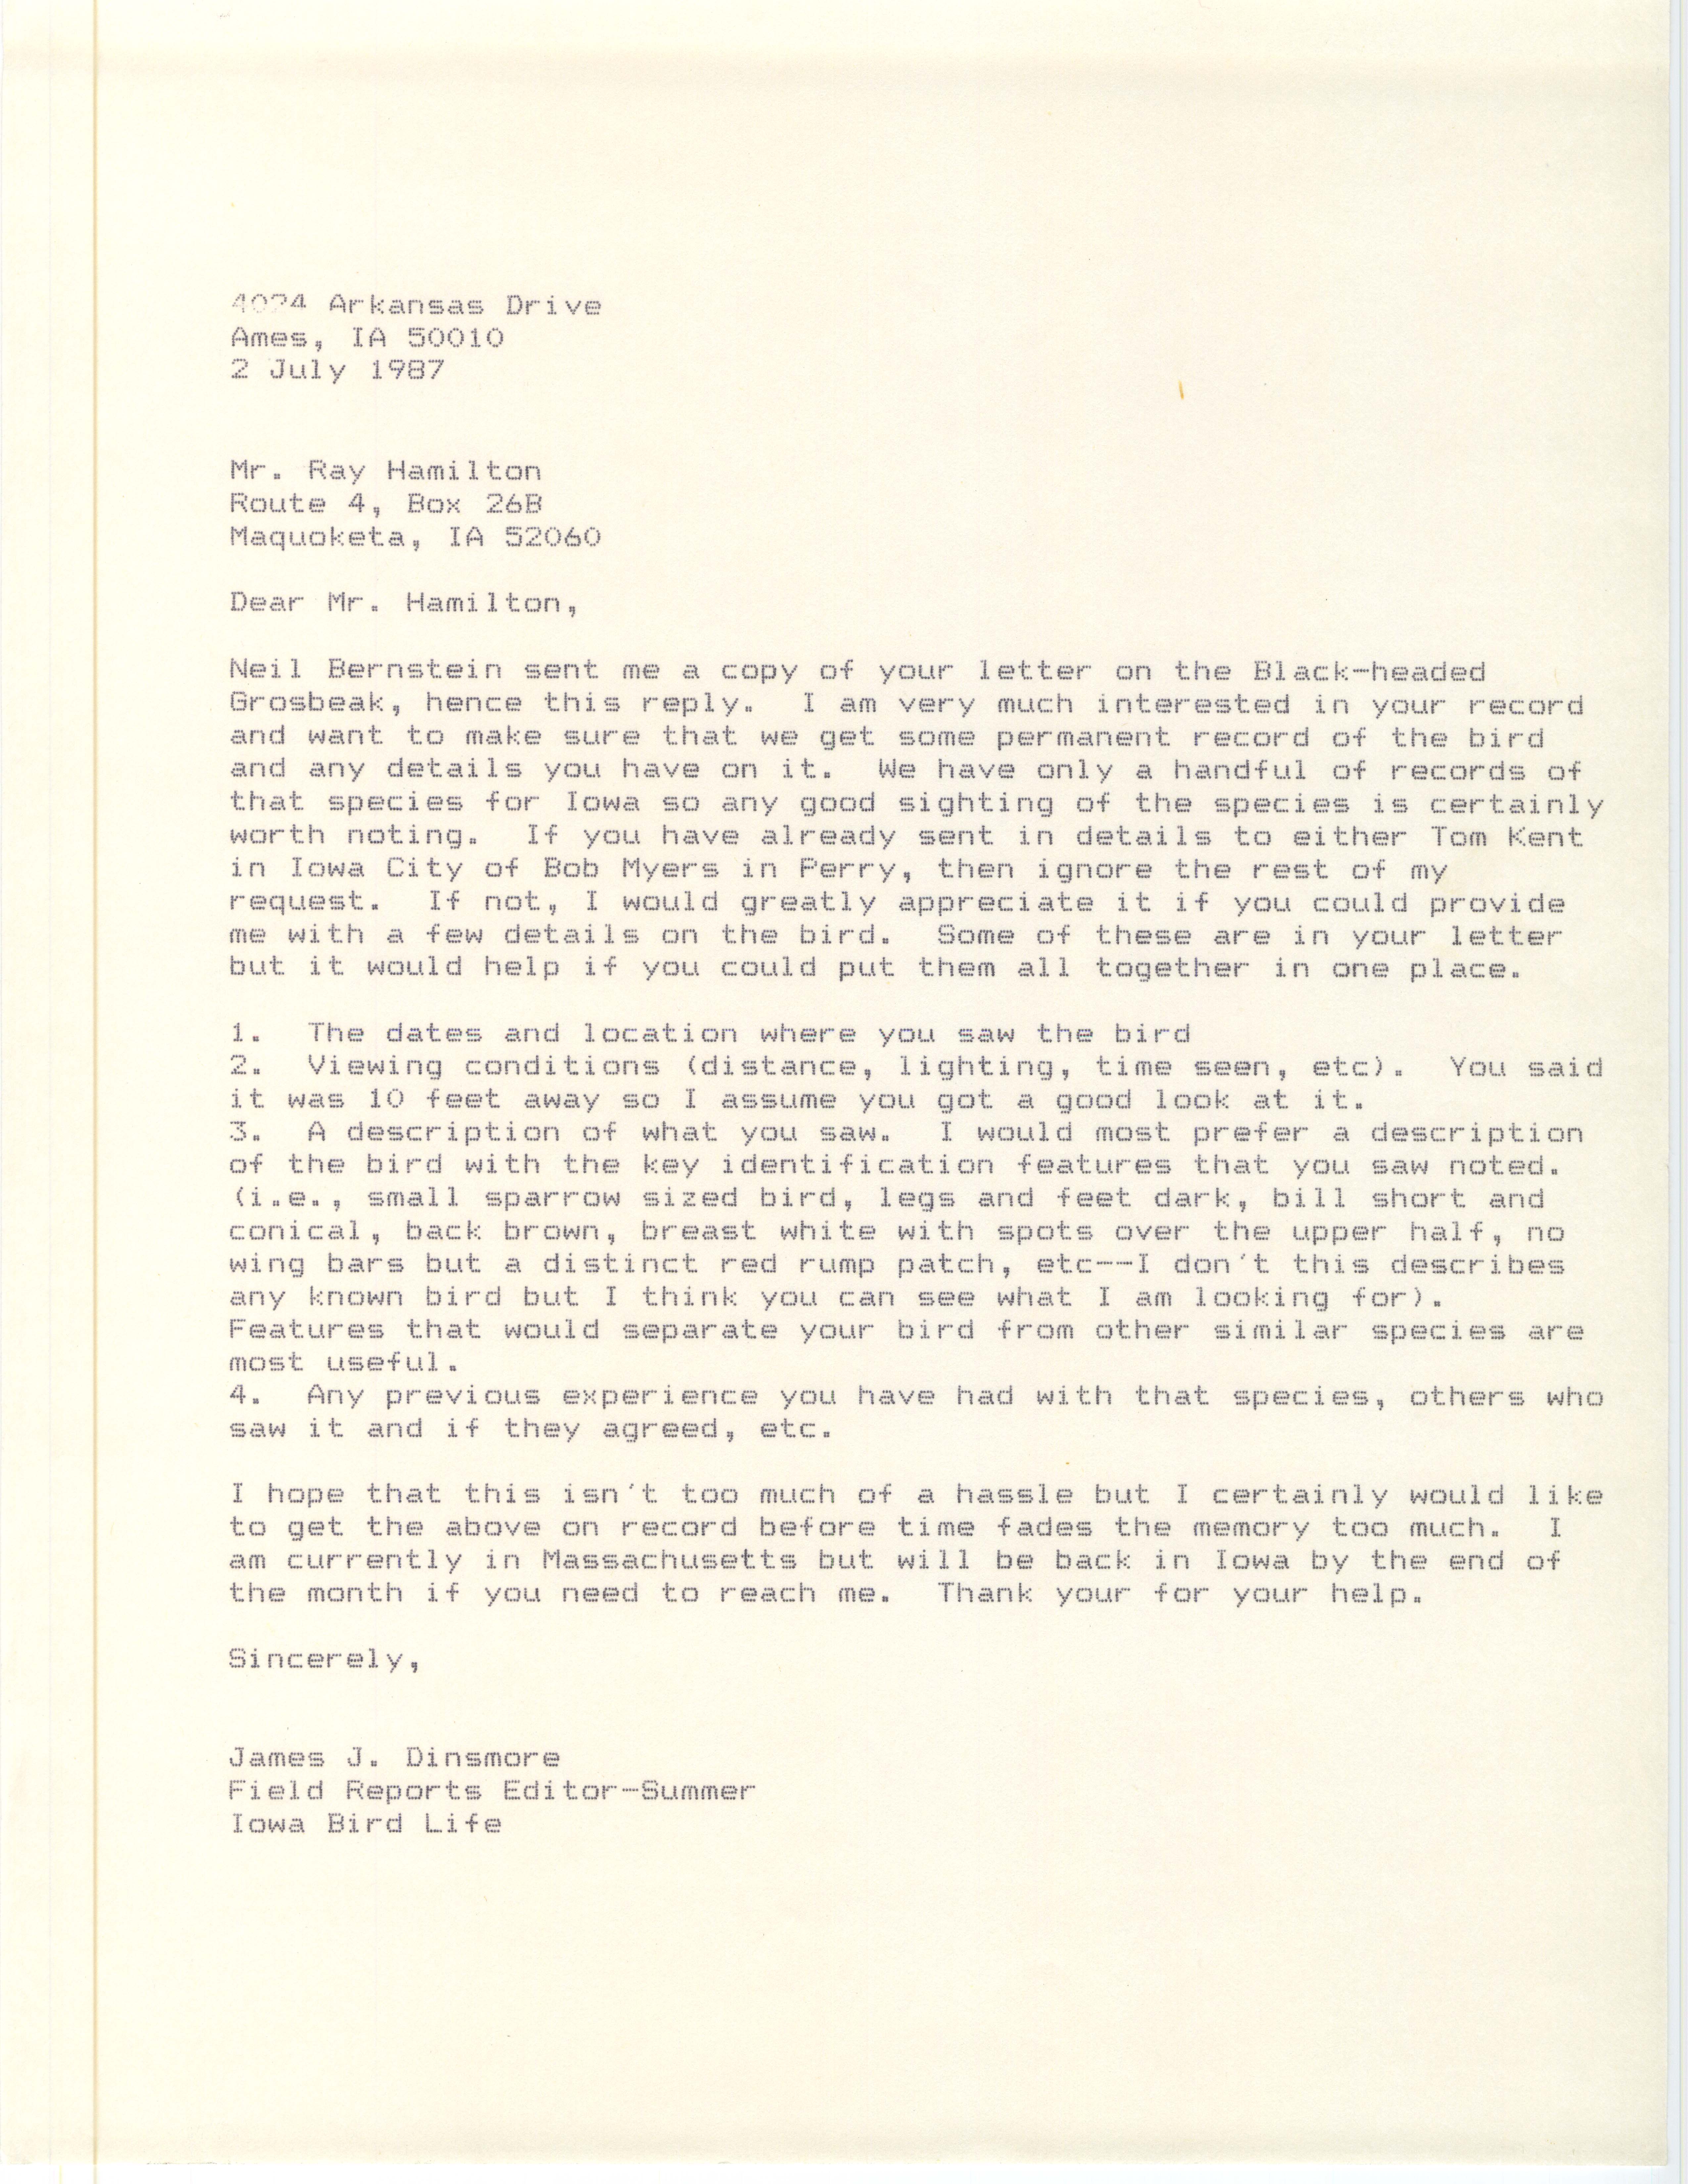 James J. Dinsmore letter to Ray Hamilton regarding a Black-headed Grosbeak sighting, July 2, 1987